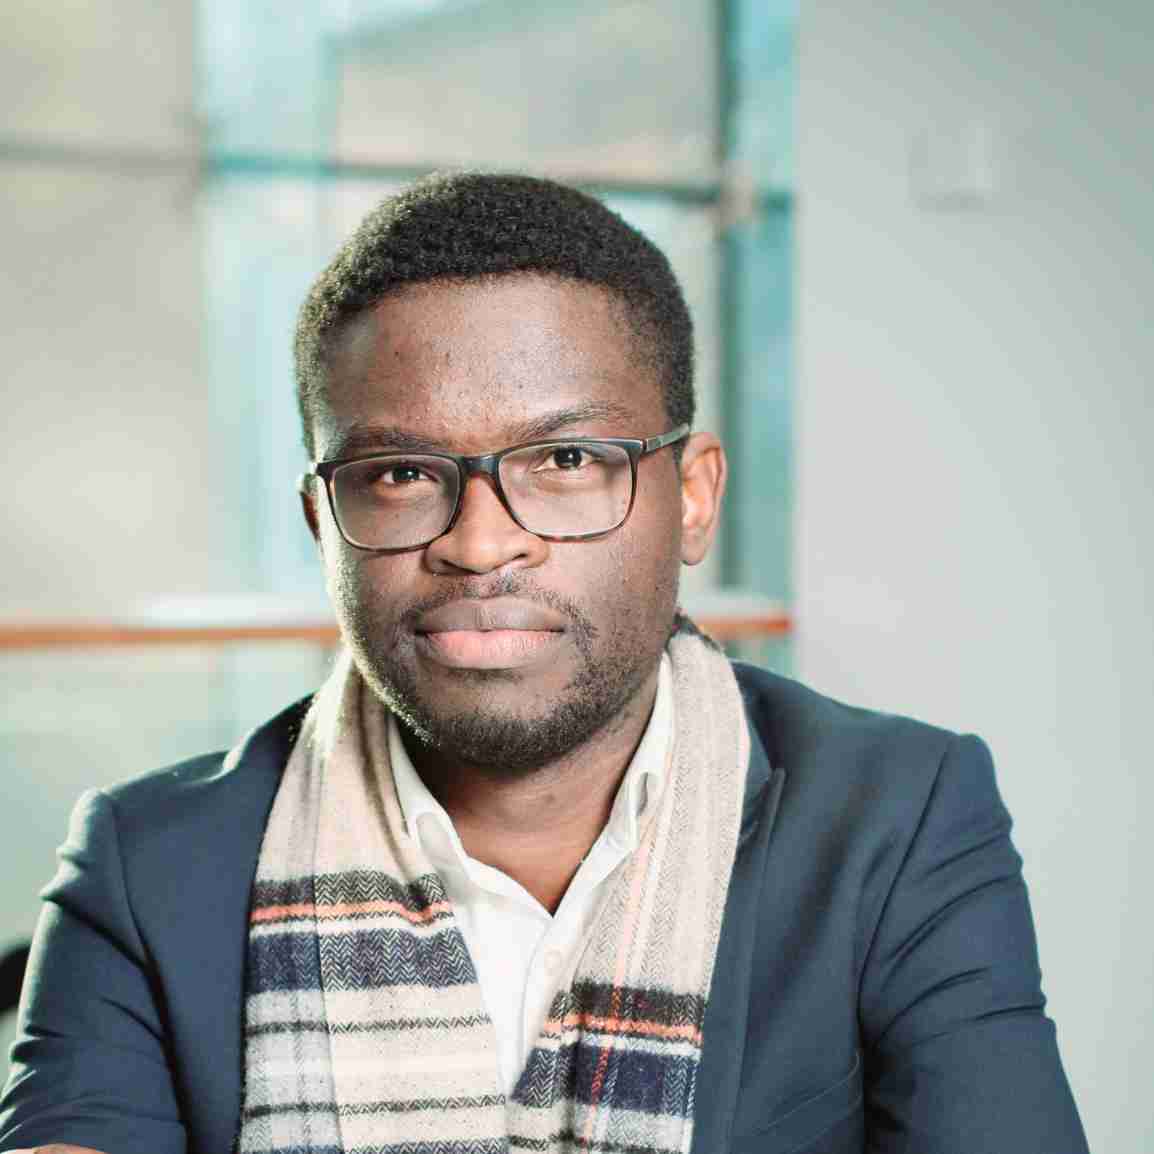 Profile image of Daniel Ogunniyi